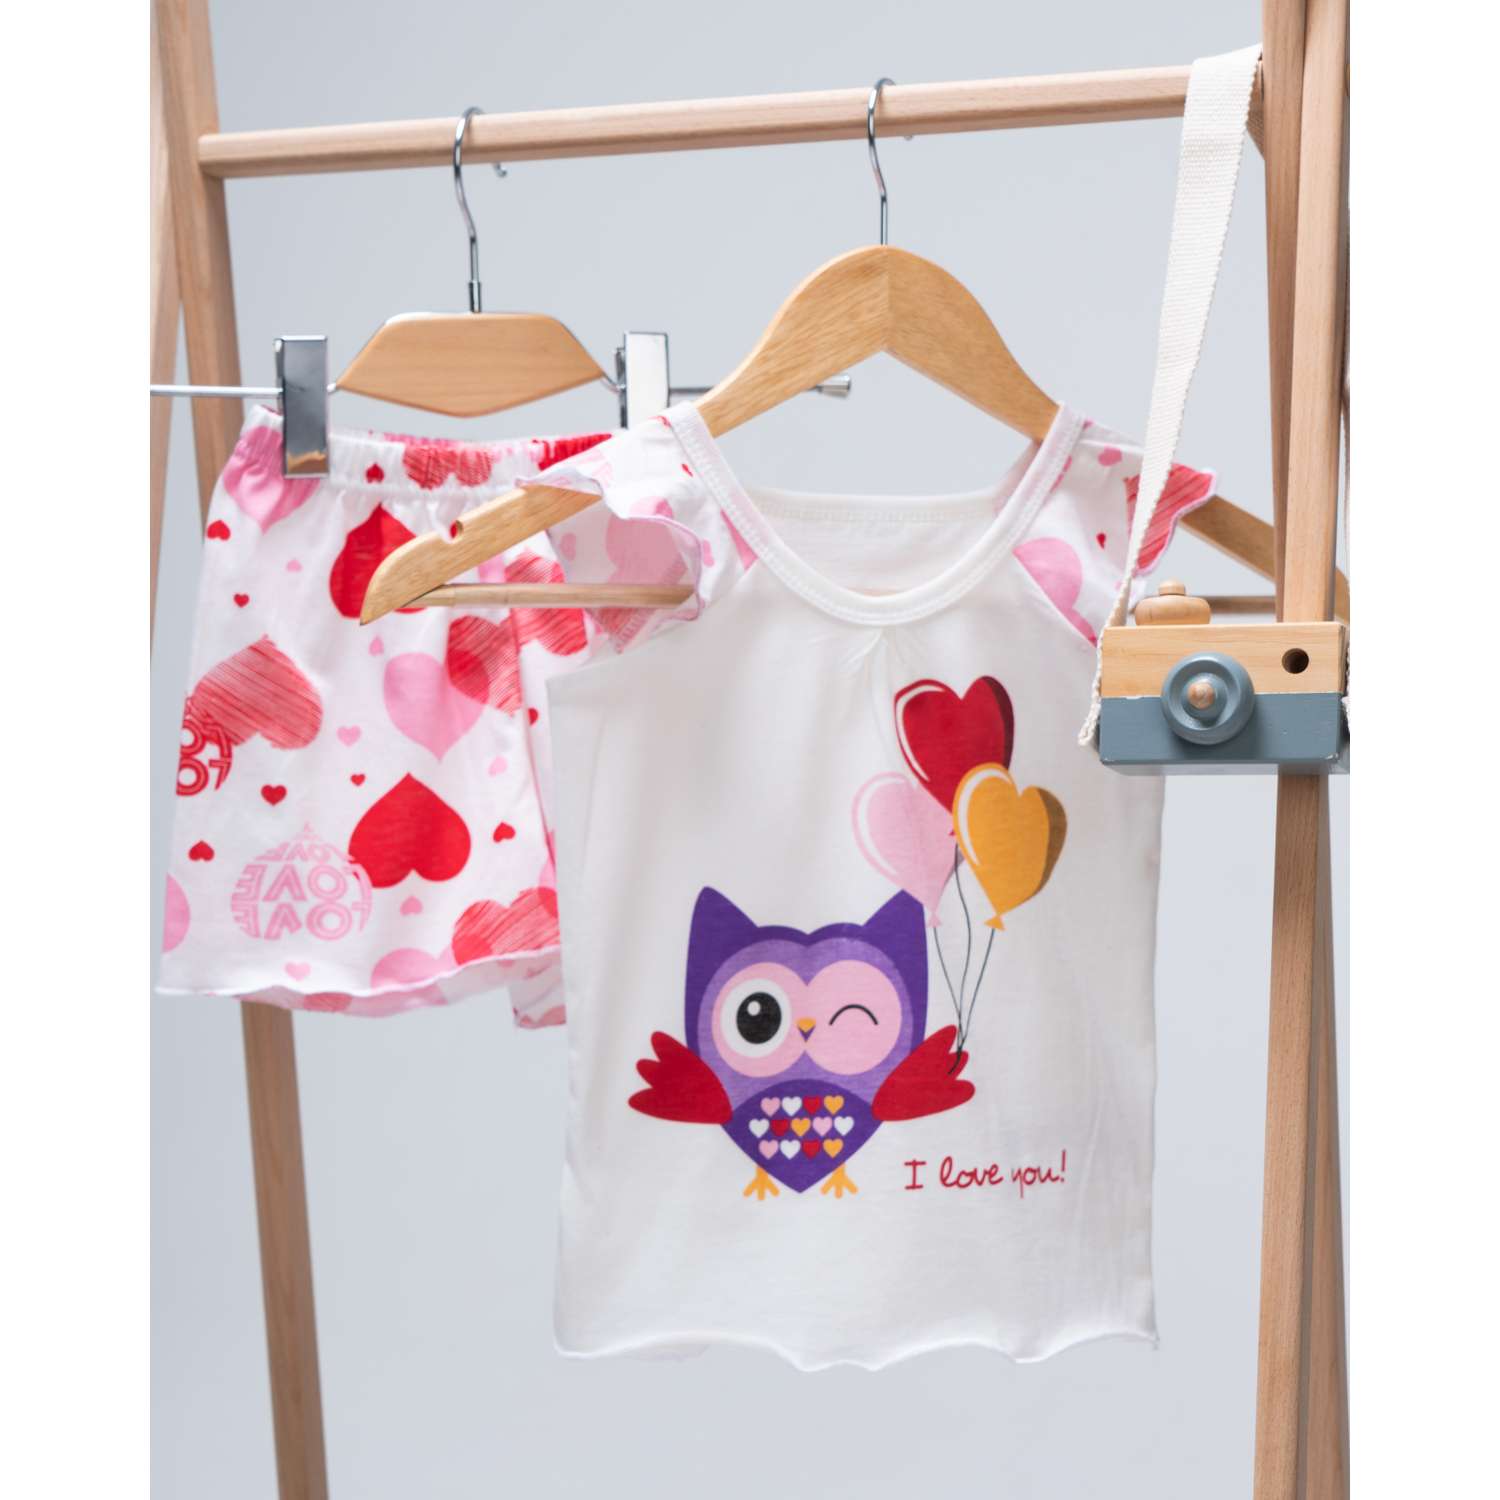 Пижама Babycollection 603/pjm004/sph/k1/012/p1/W*dмолочный розовый - фото 10